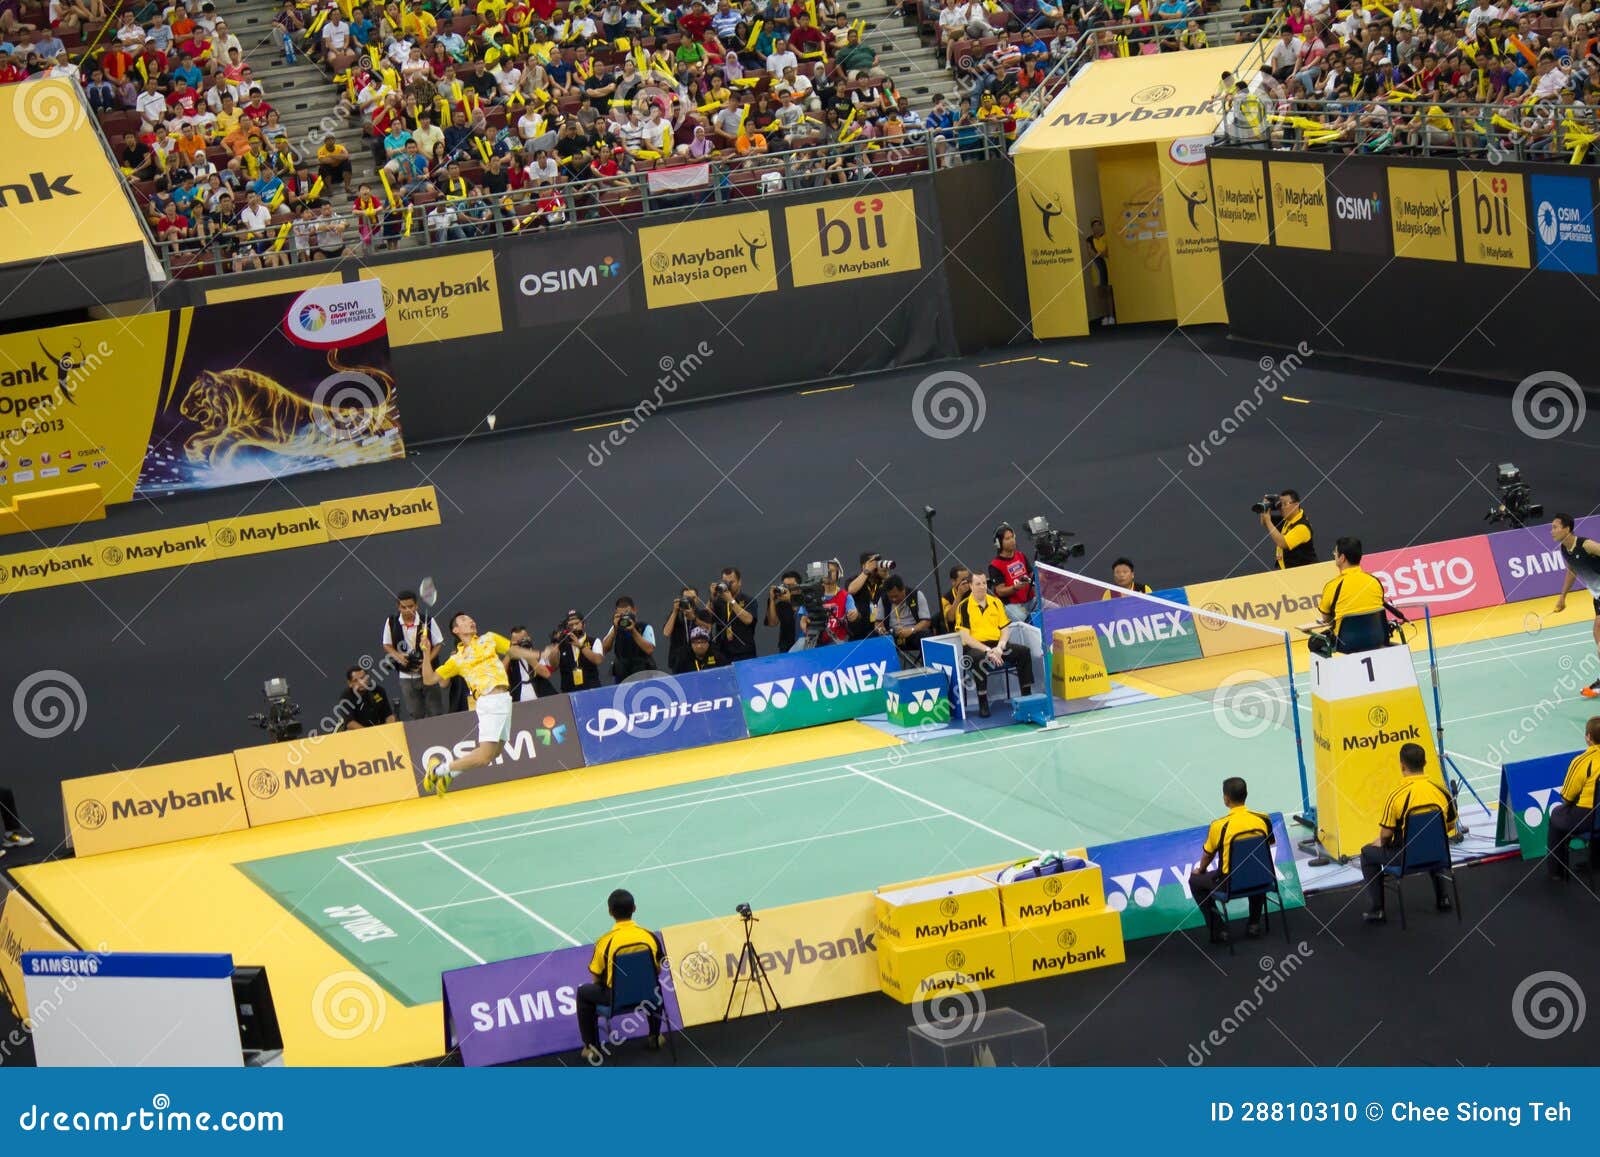 Malaysia Open Badminton Championship 2013 Editorial Image  Image 28810310